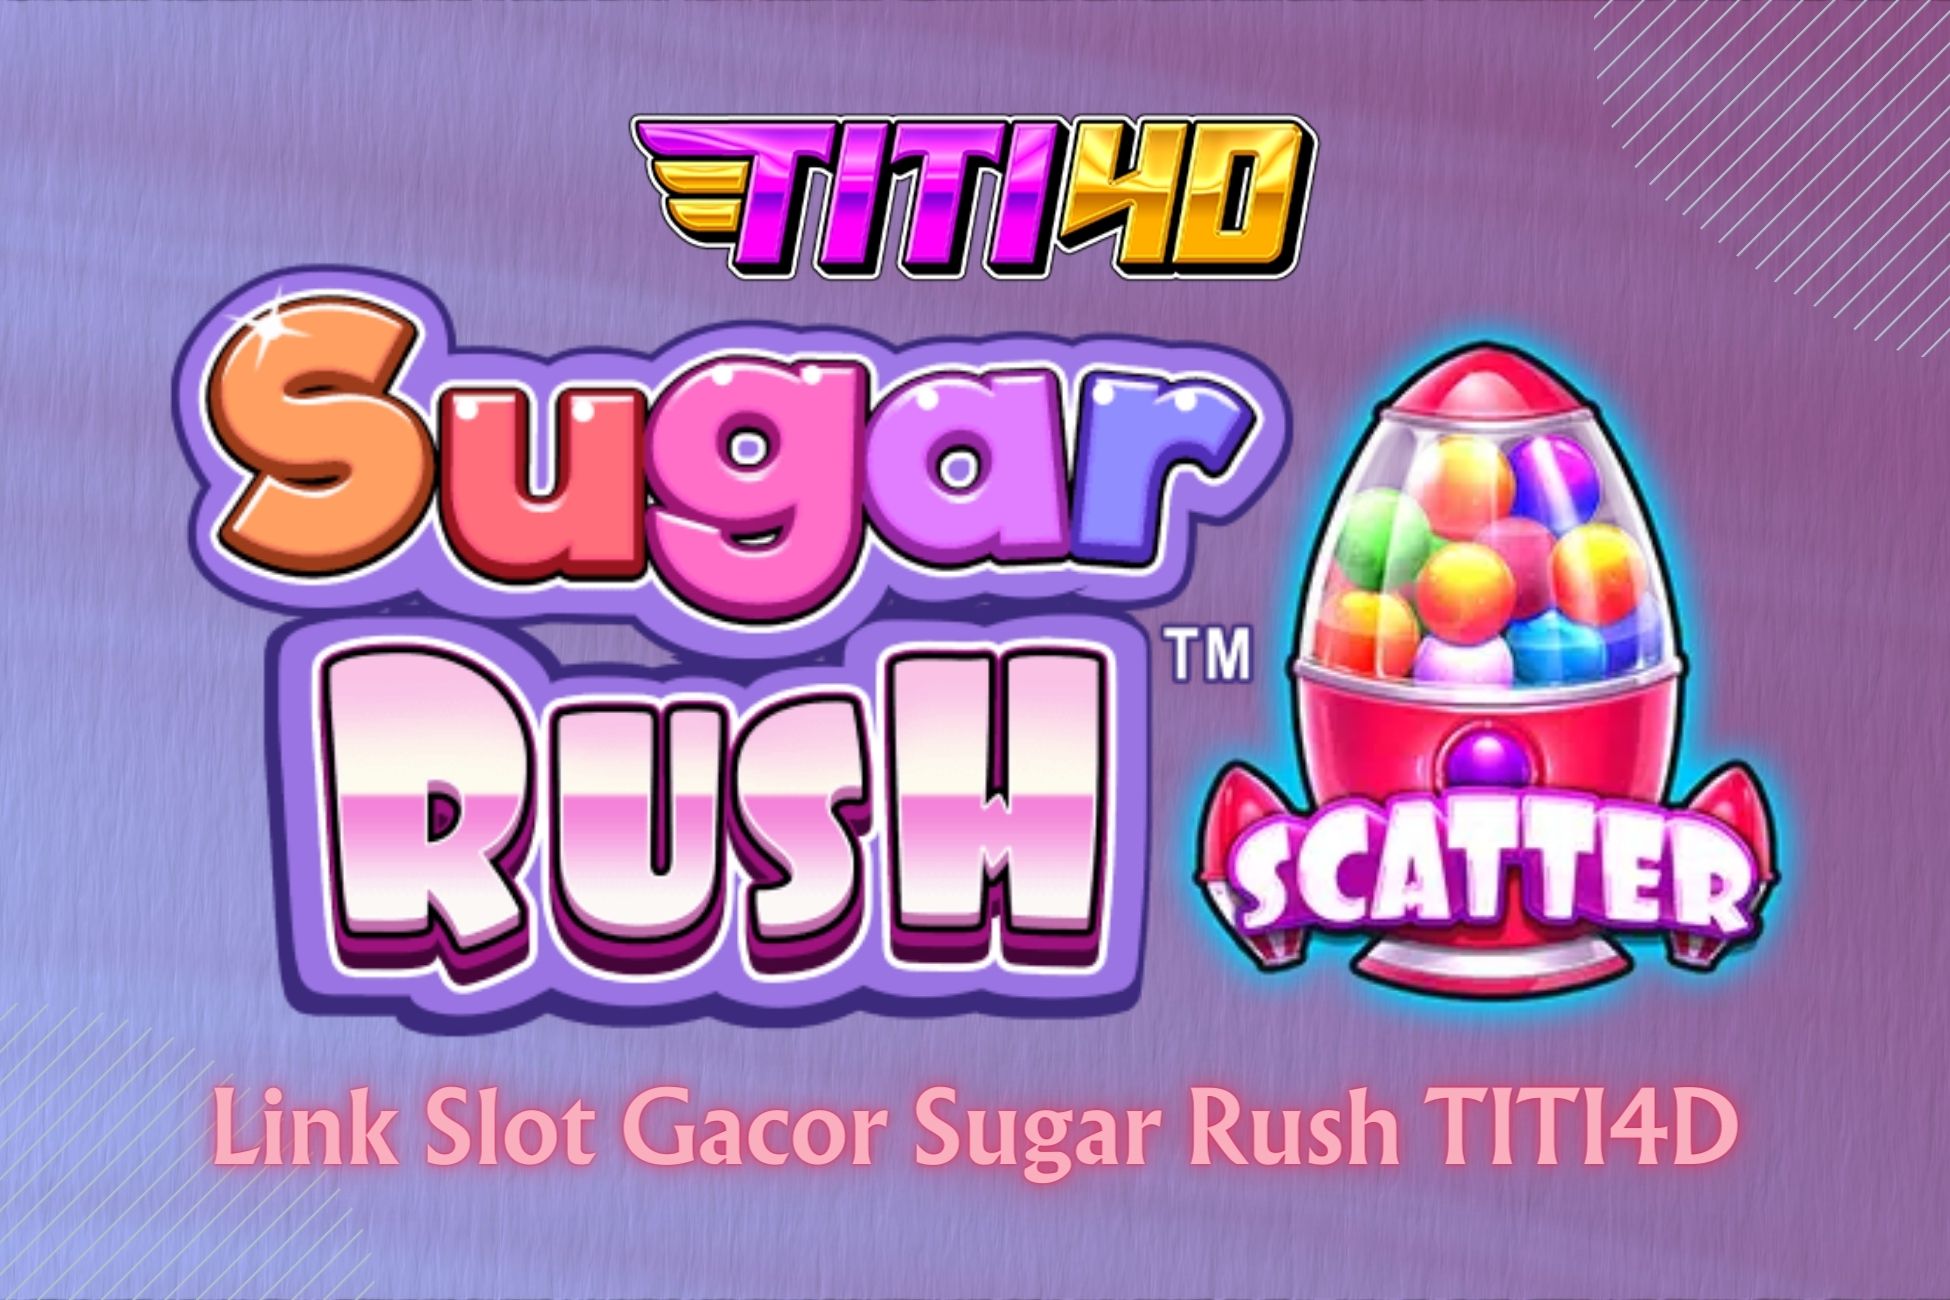 Link Slot Gacor Sugar Rush TITI4D